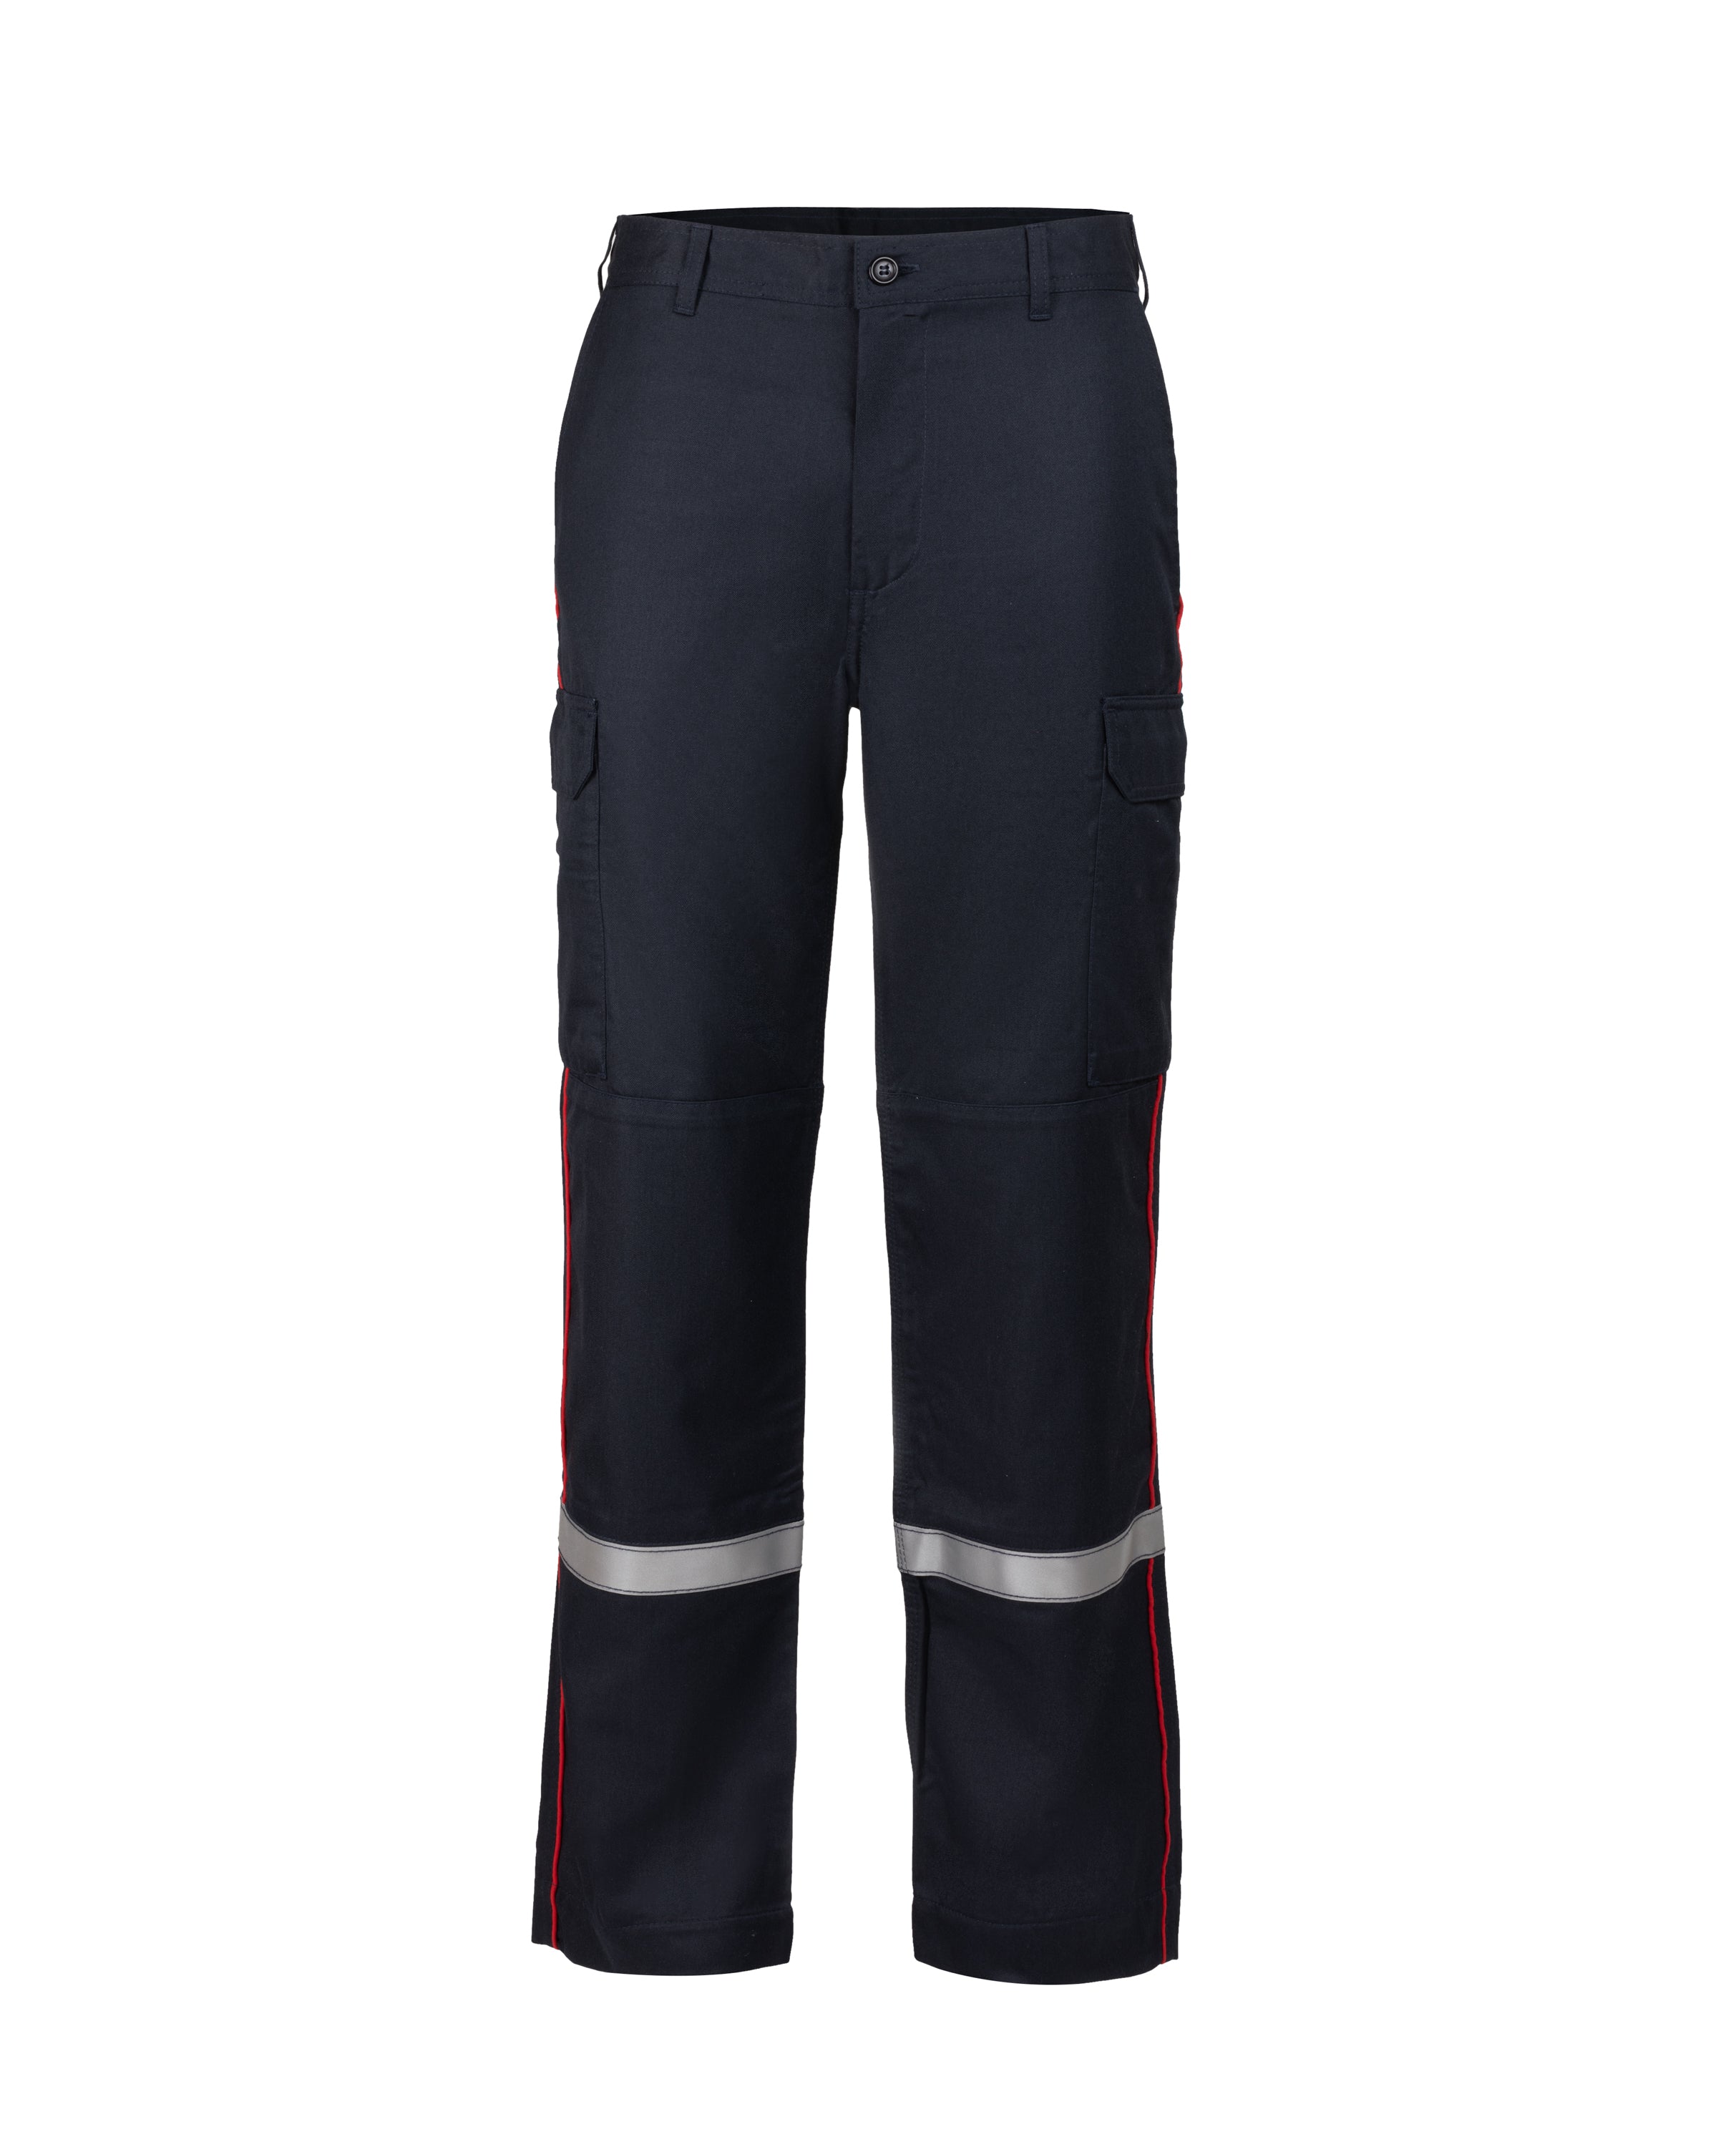 Firefighter Pants - 50040501